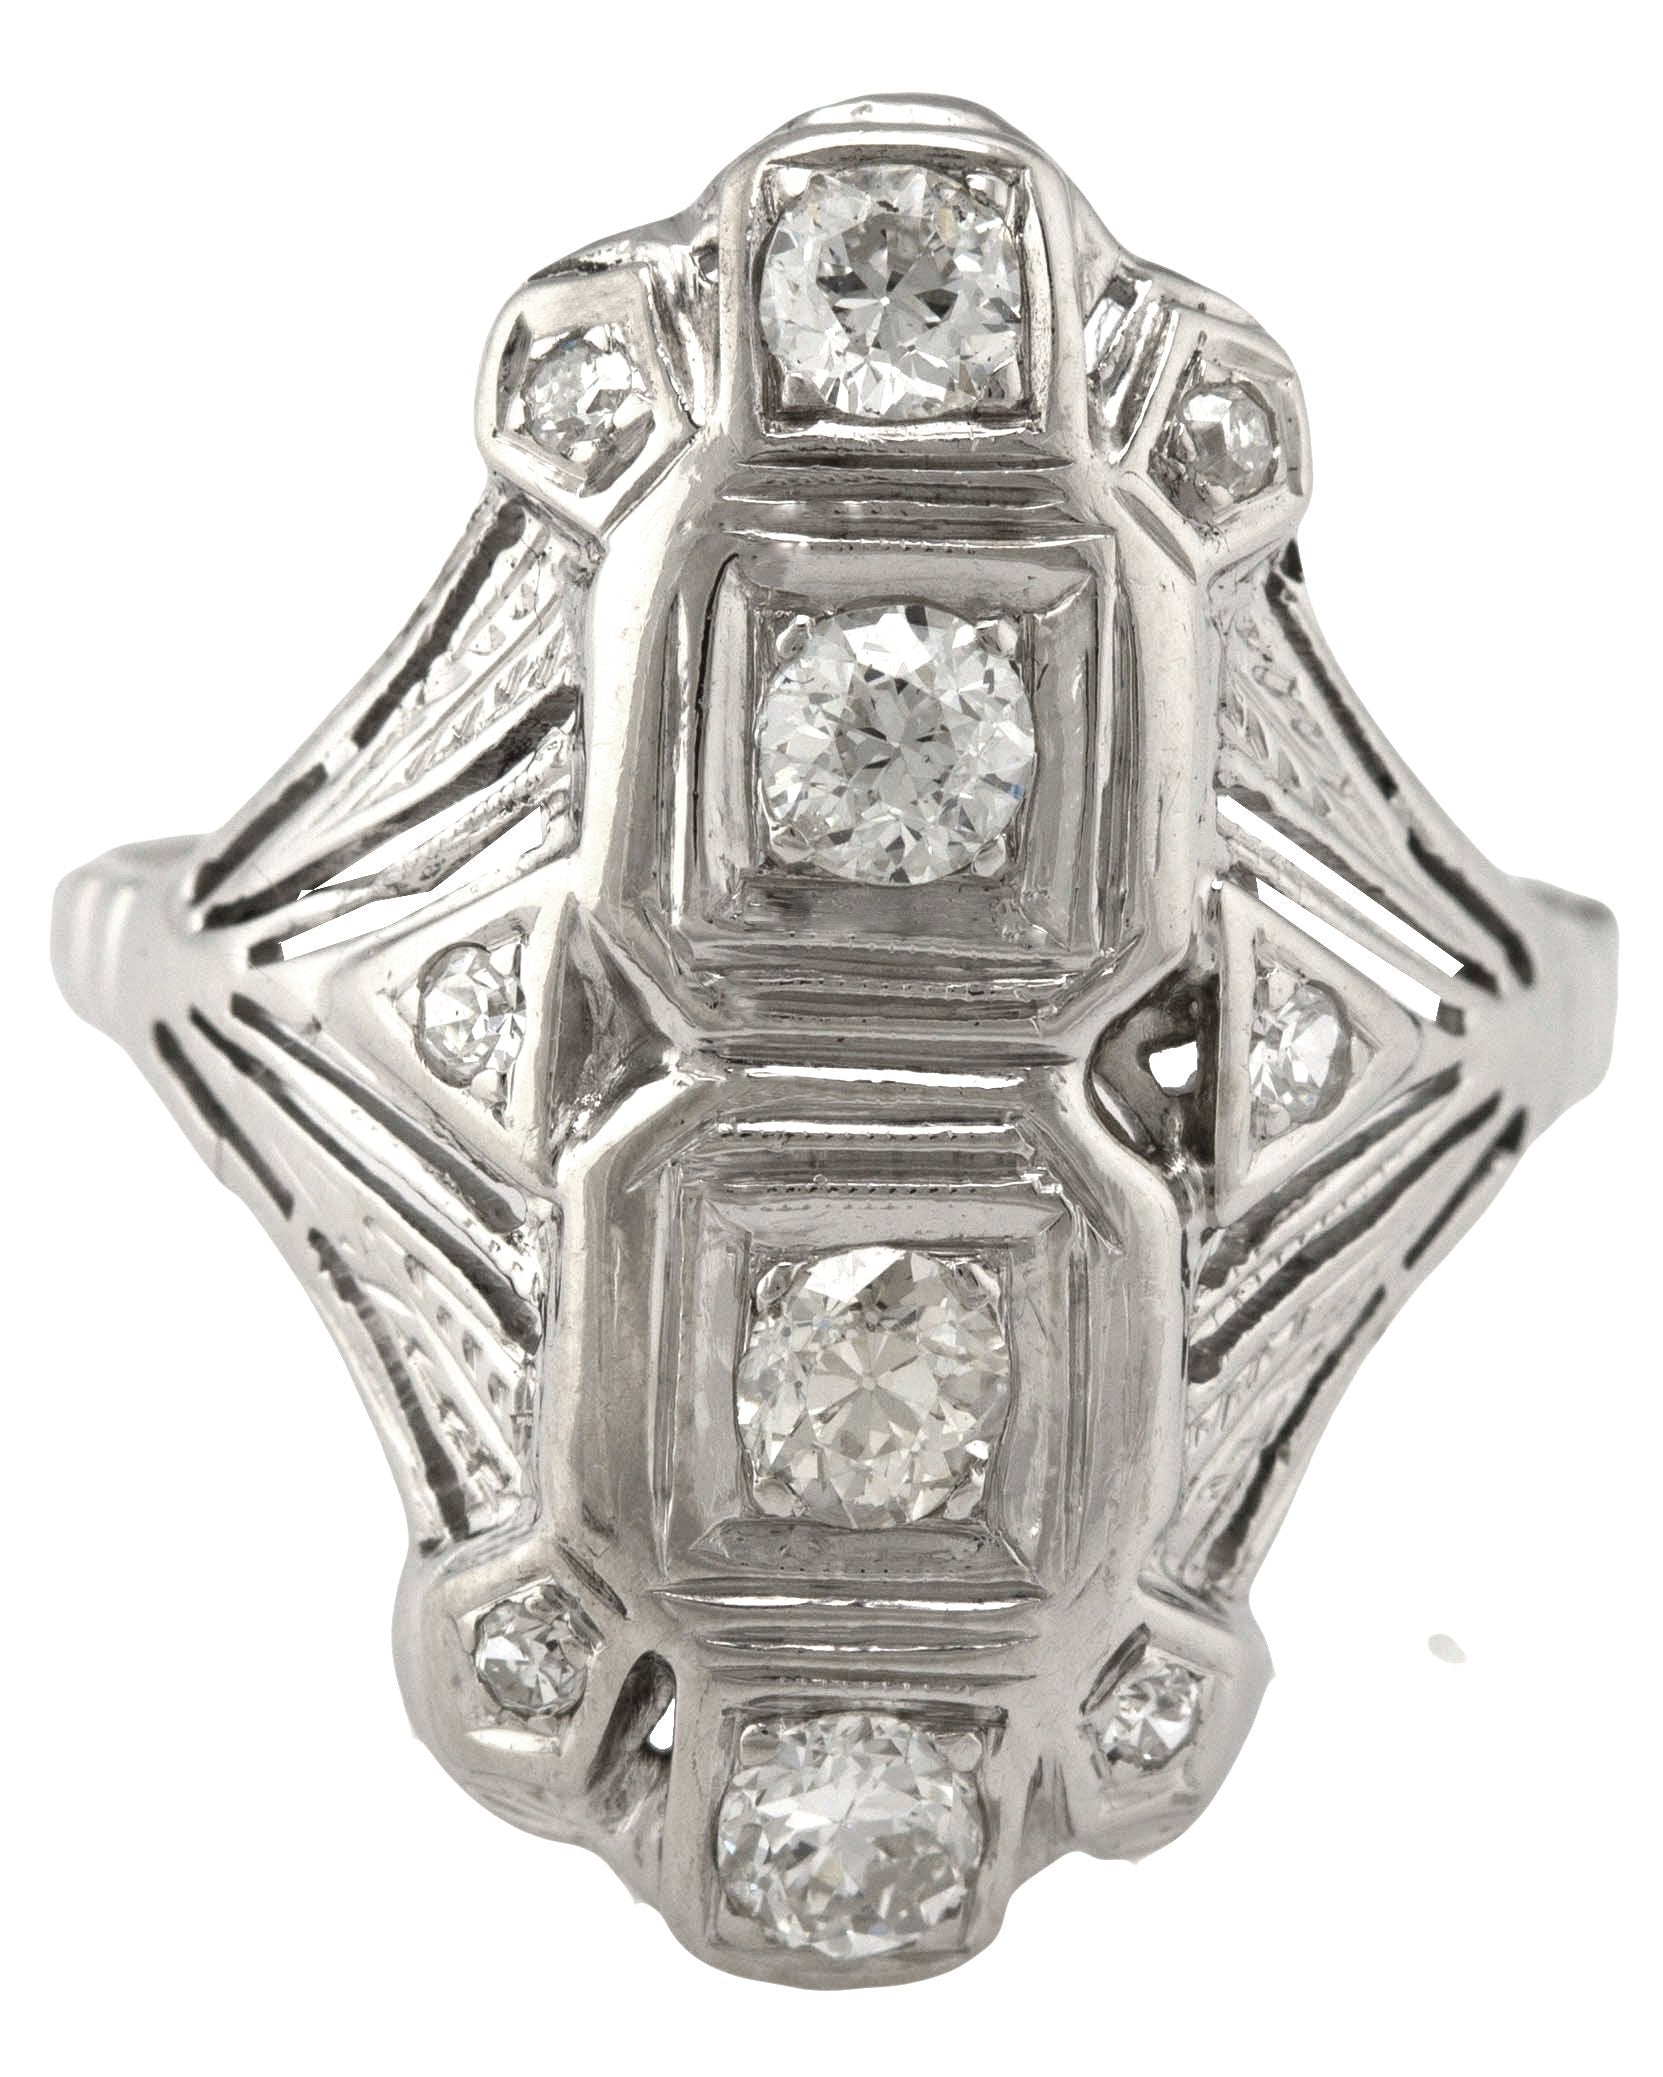 Ladies Antique Art Deco 14K White Gold 0.72ctw Diamond Cocktail Ring